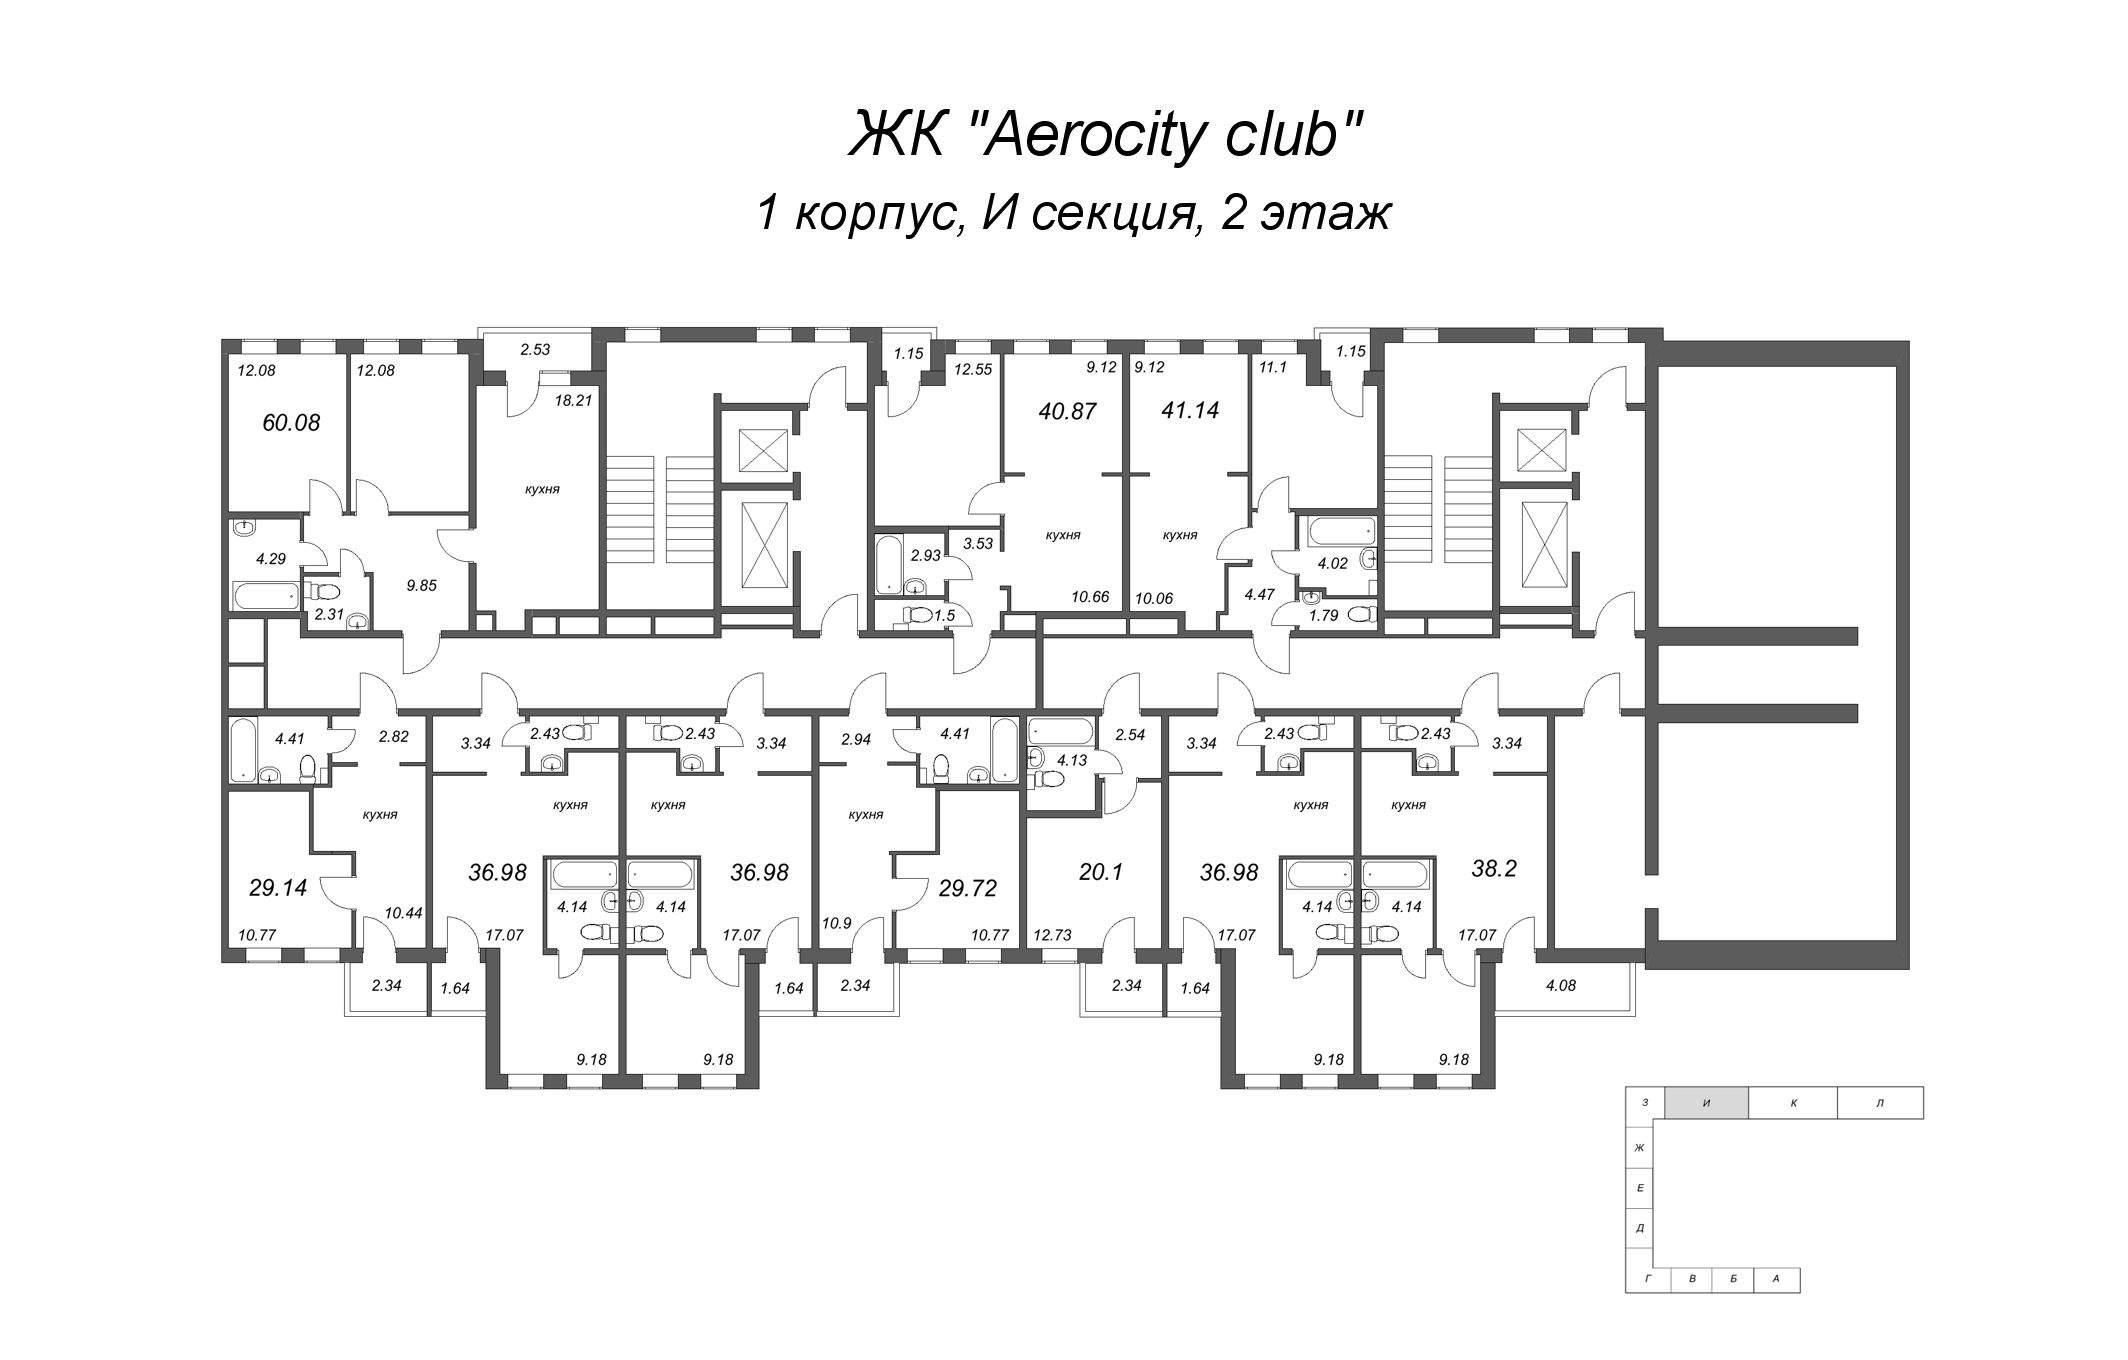 2-комнатная (Евро) квартира, 38.2 м² - планировка этажа